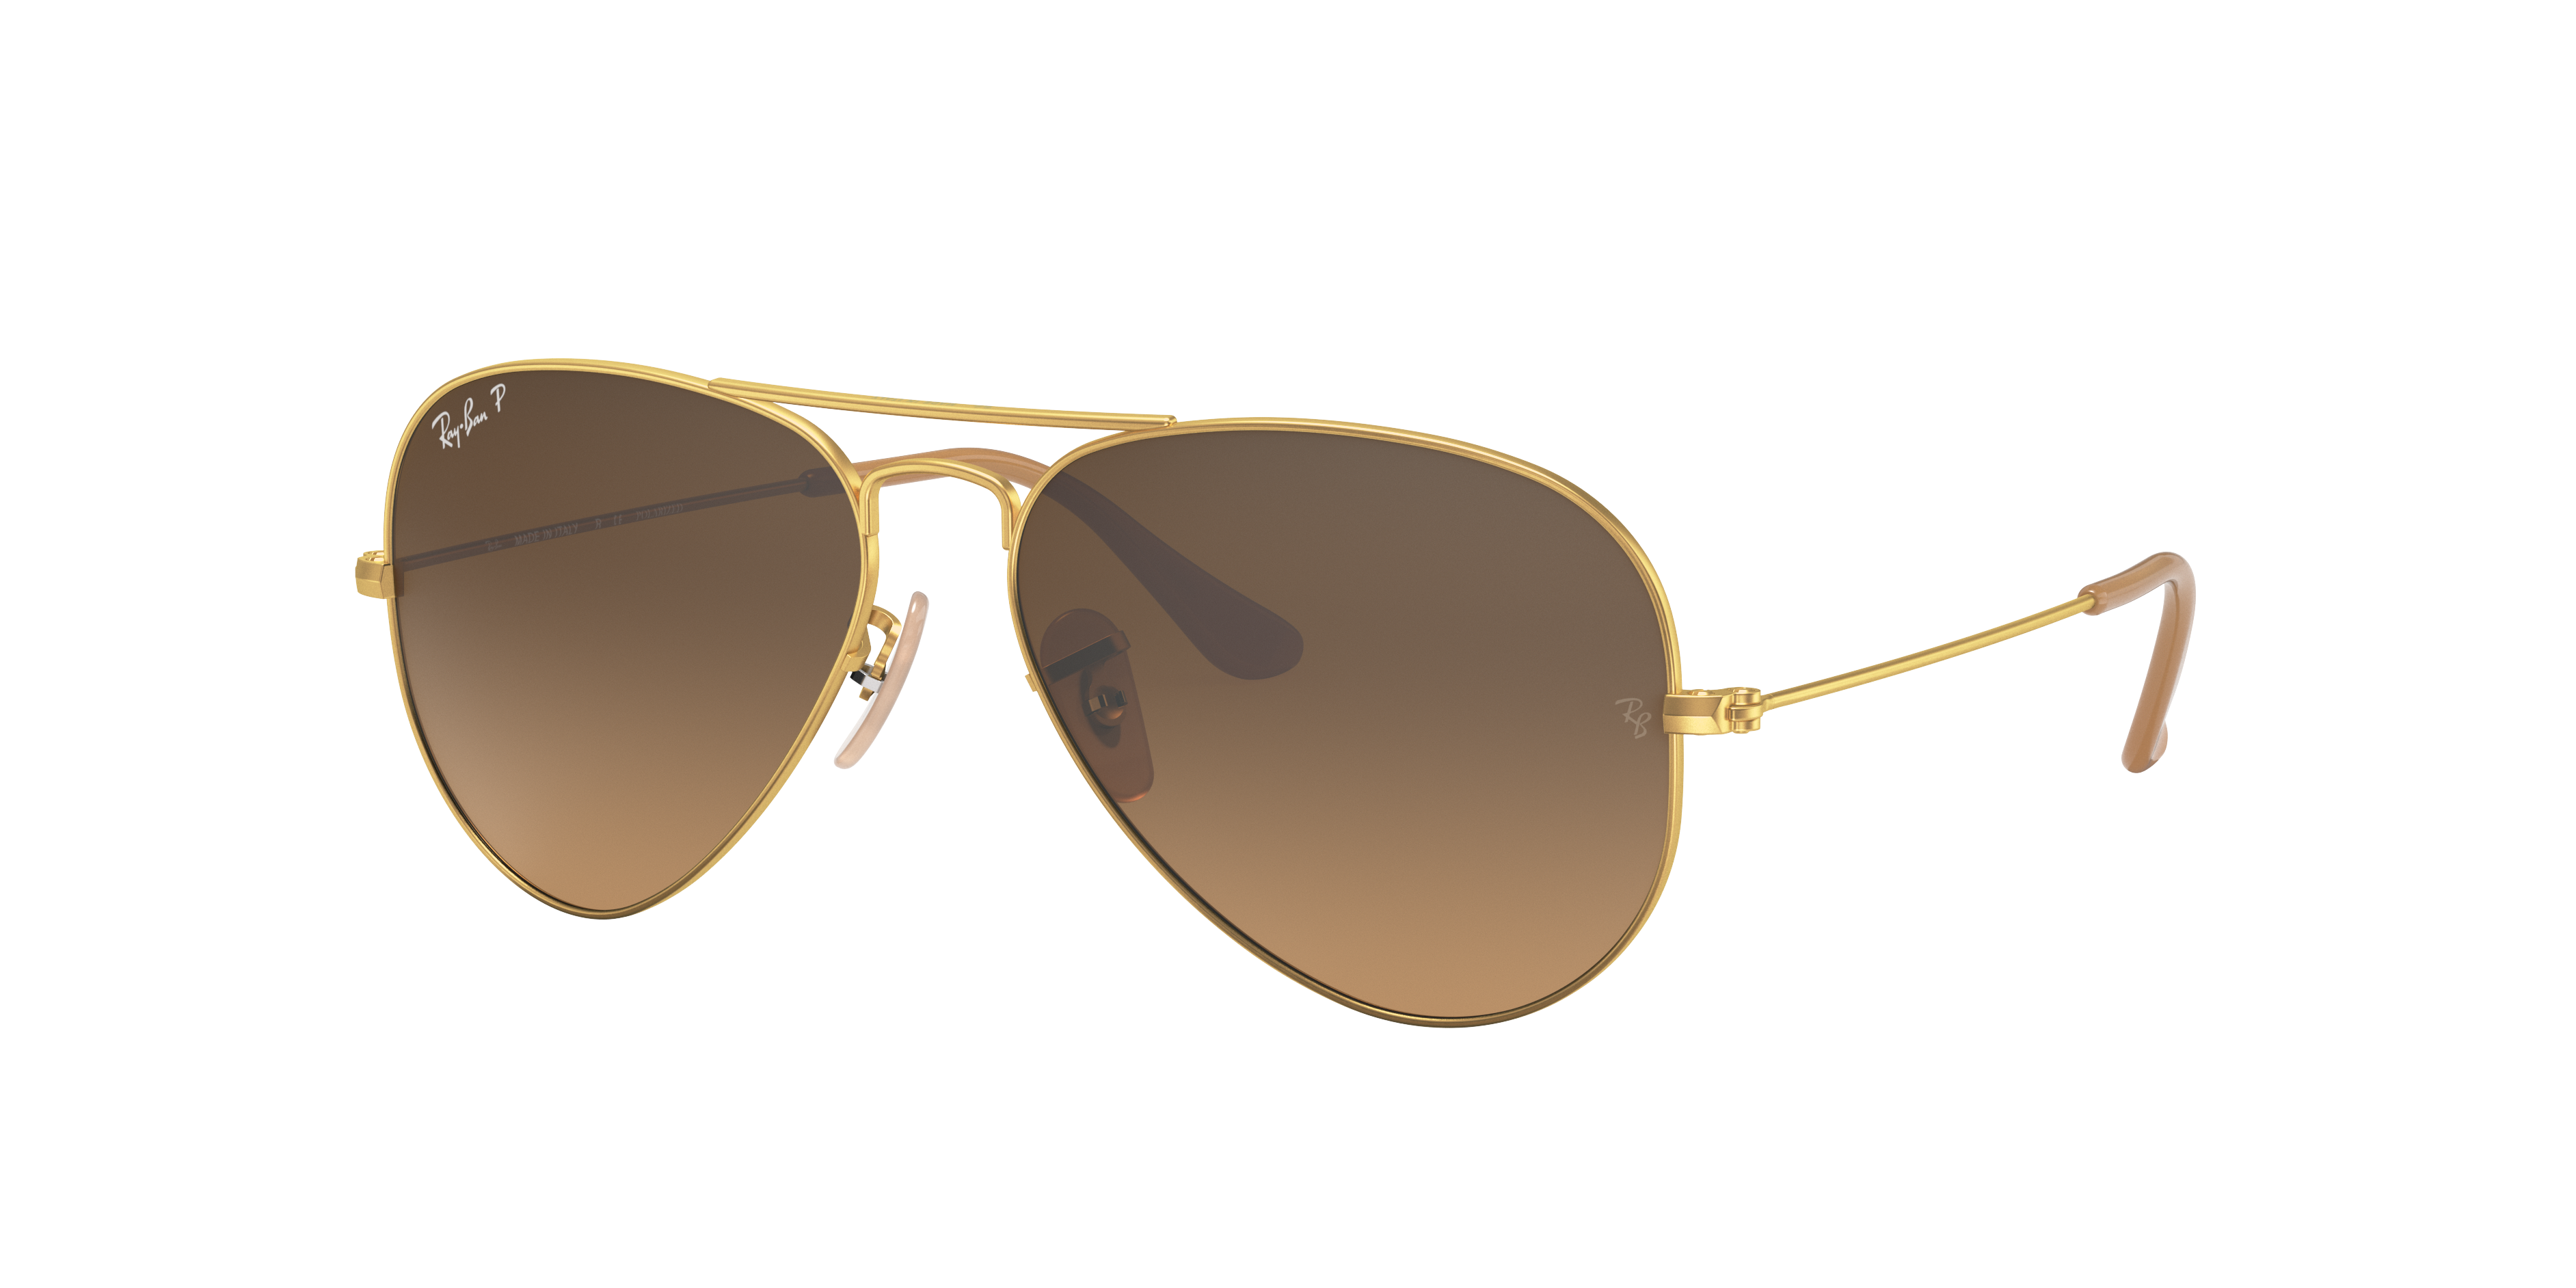 aviator gradient sunglasses